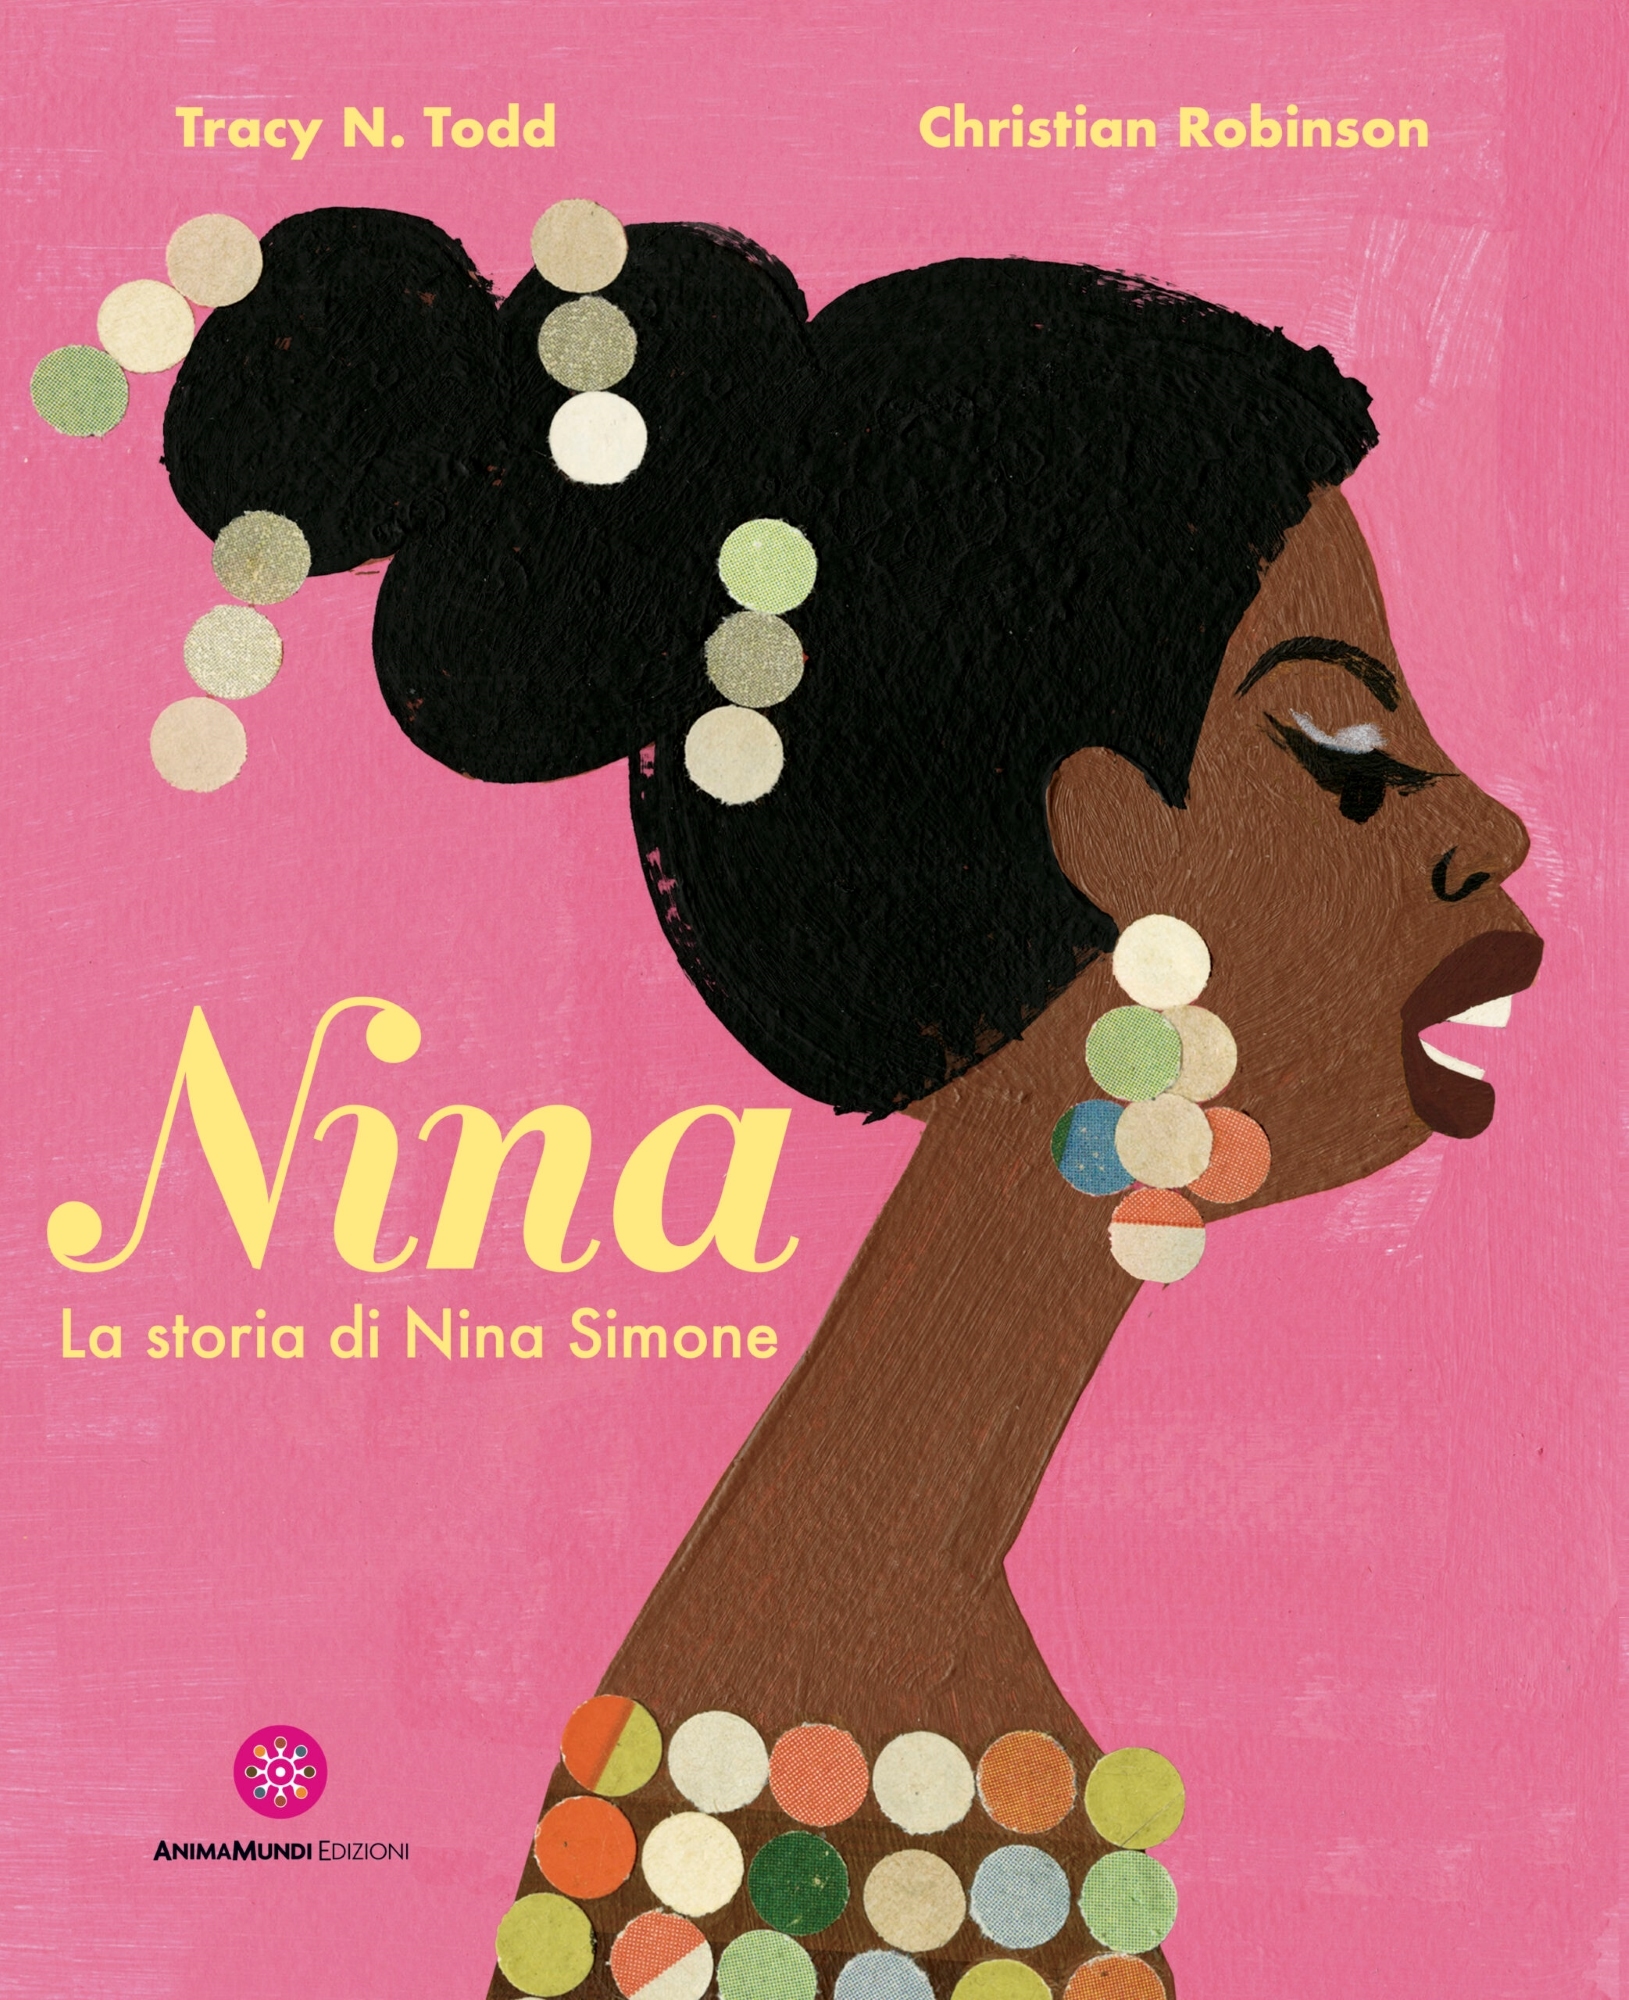 05_Traci N. Todd, Christian Robinson, Nina. La storia di Nina Simone